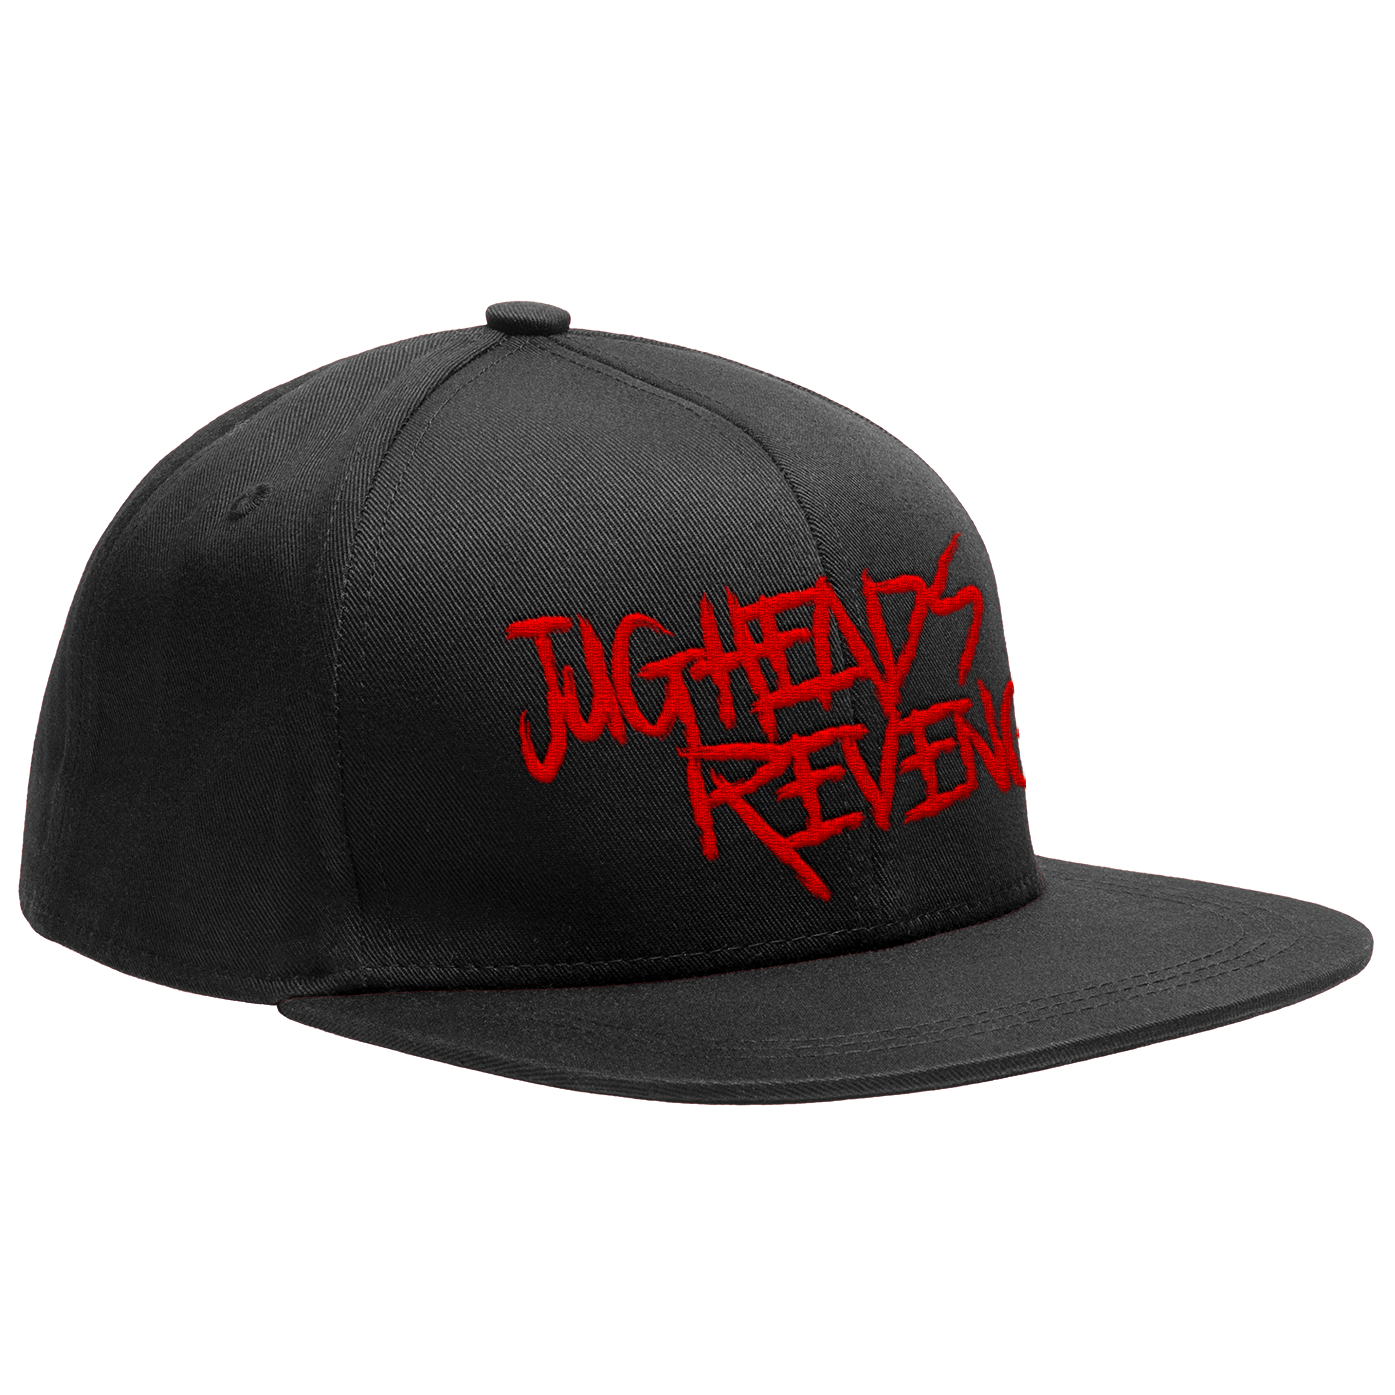 JUGHEAD'S REVENGE - "American Gestures Logo / Red" (Black) (Flat Bill Snapback Cap)